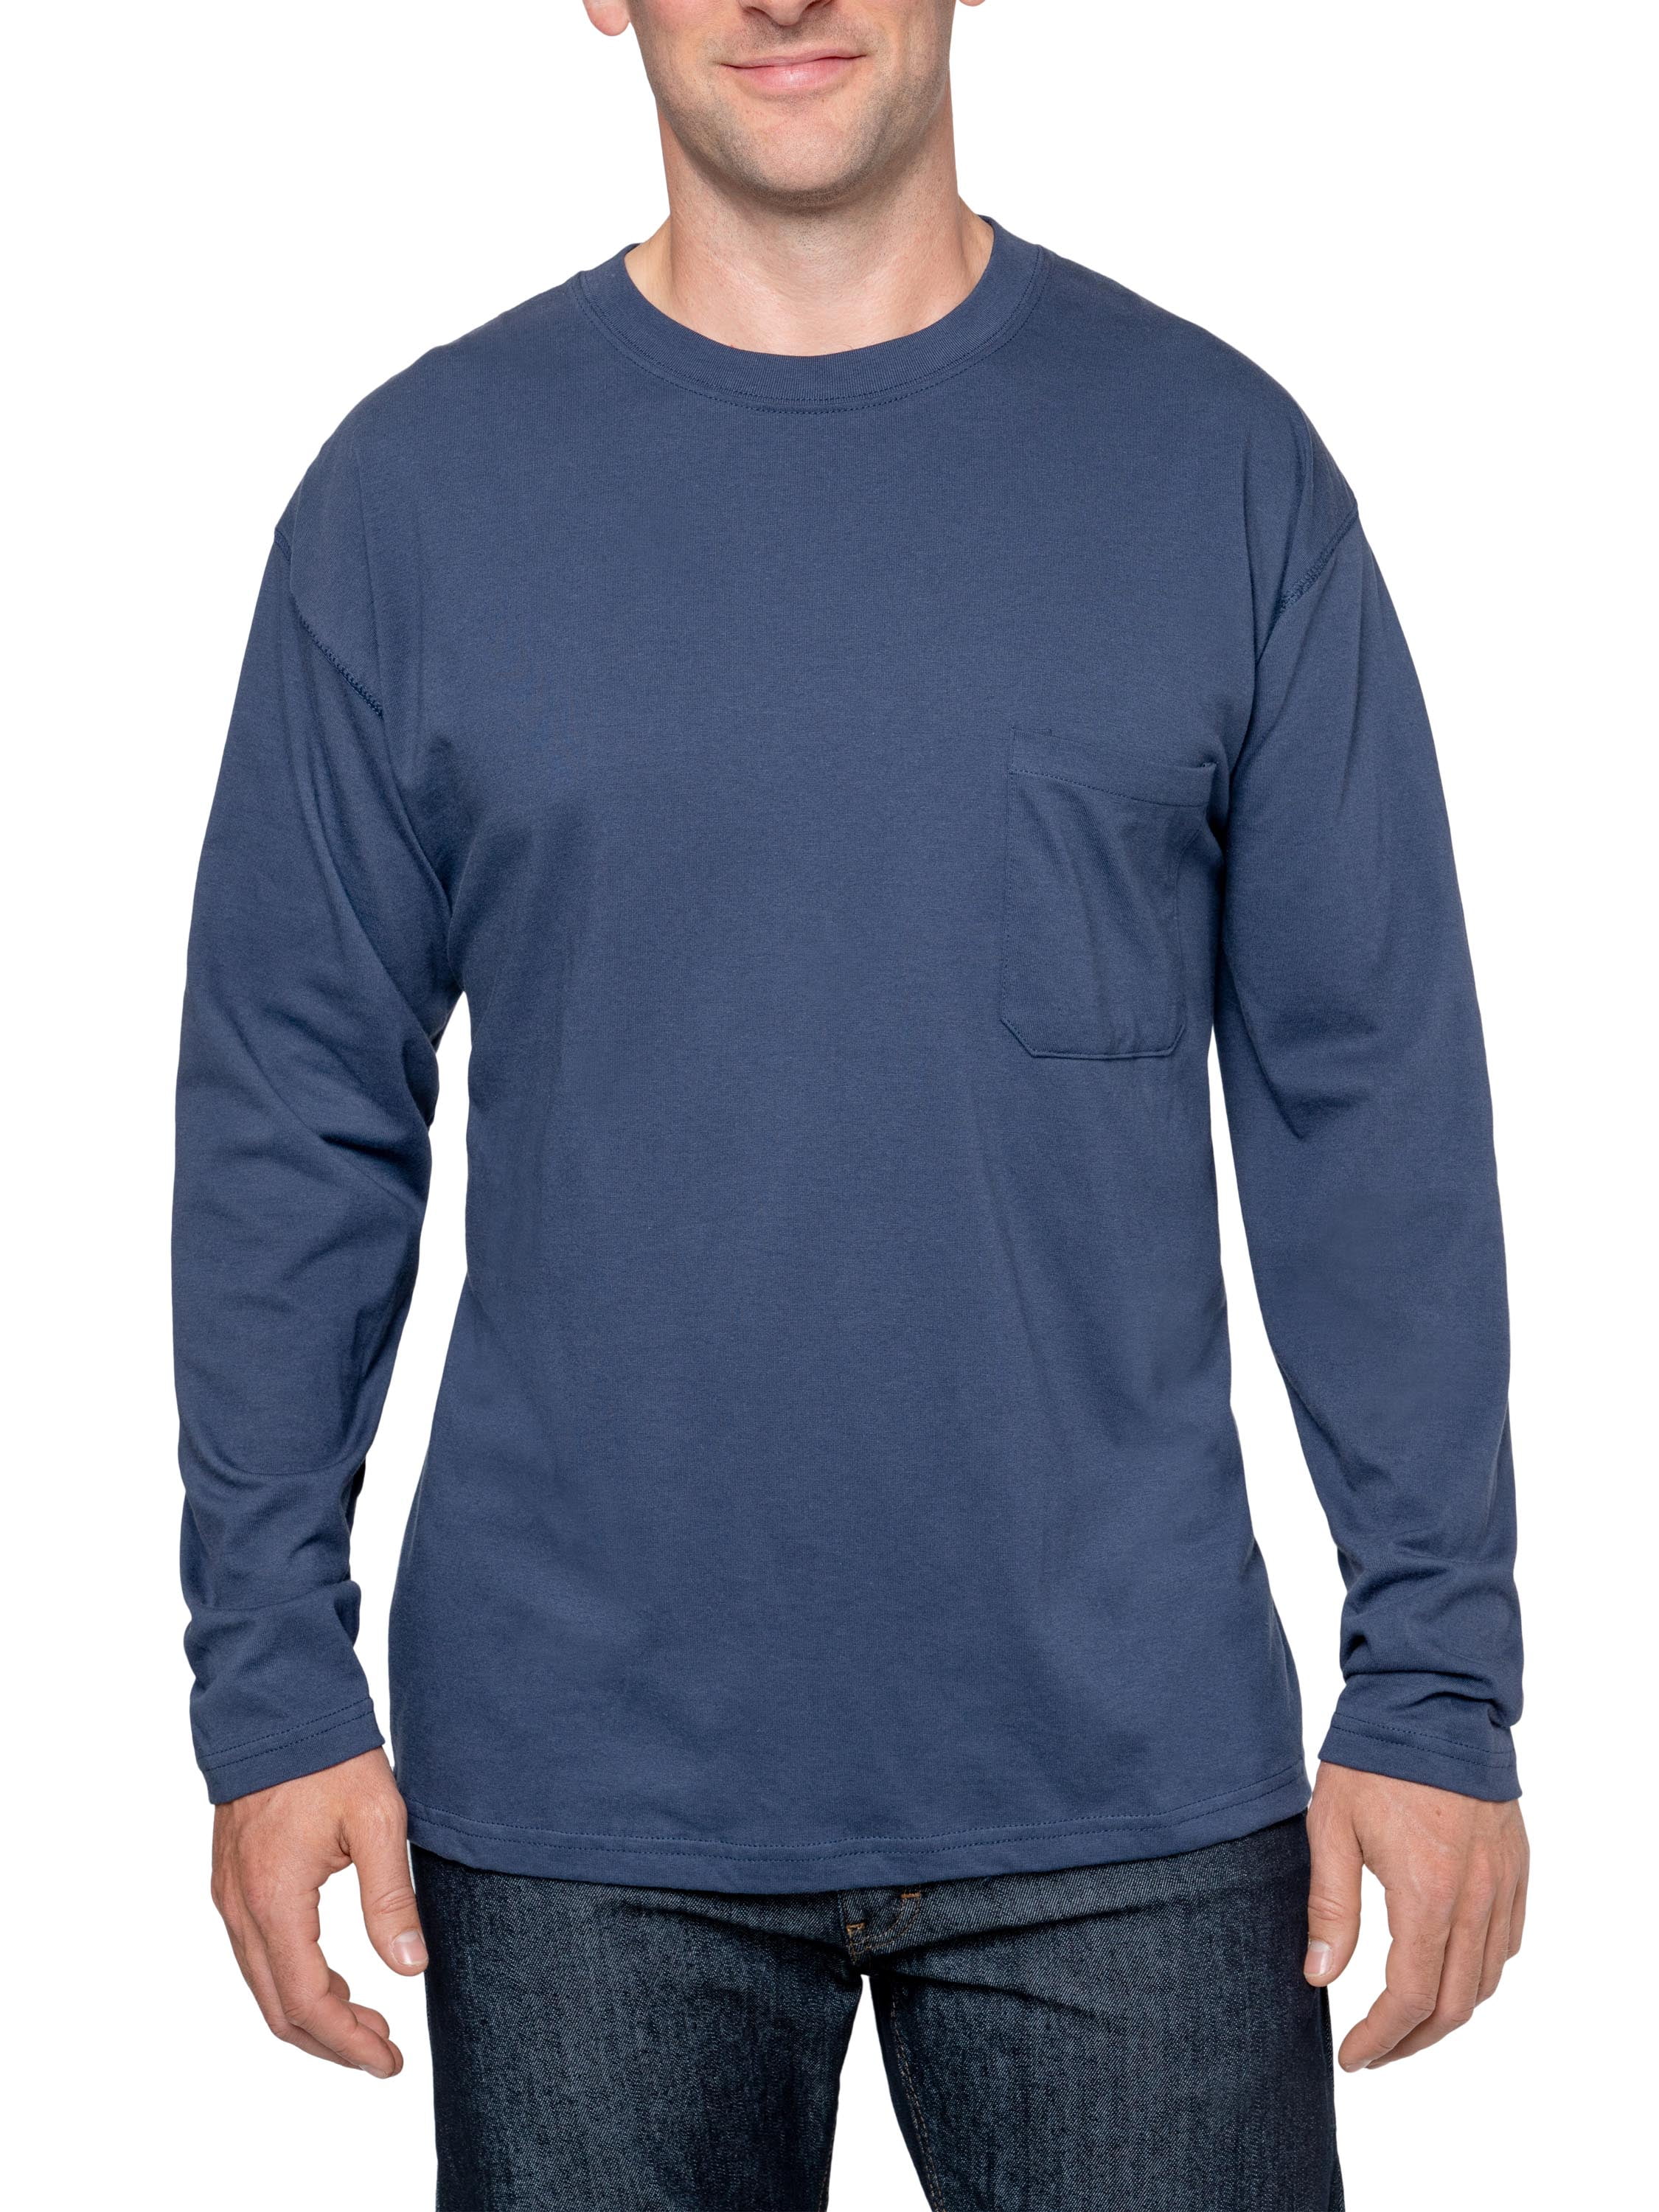 Insect Shield Men's UPF Dri-Balance Long Sleeve Pocket T-Shirt, Navy ...